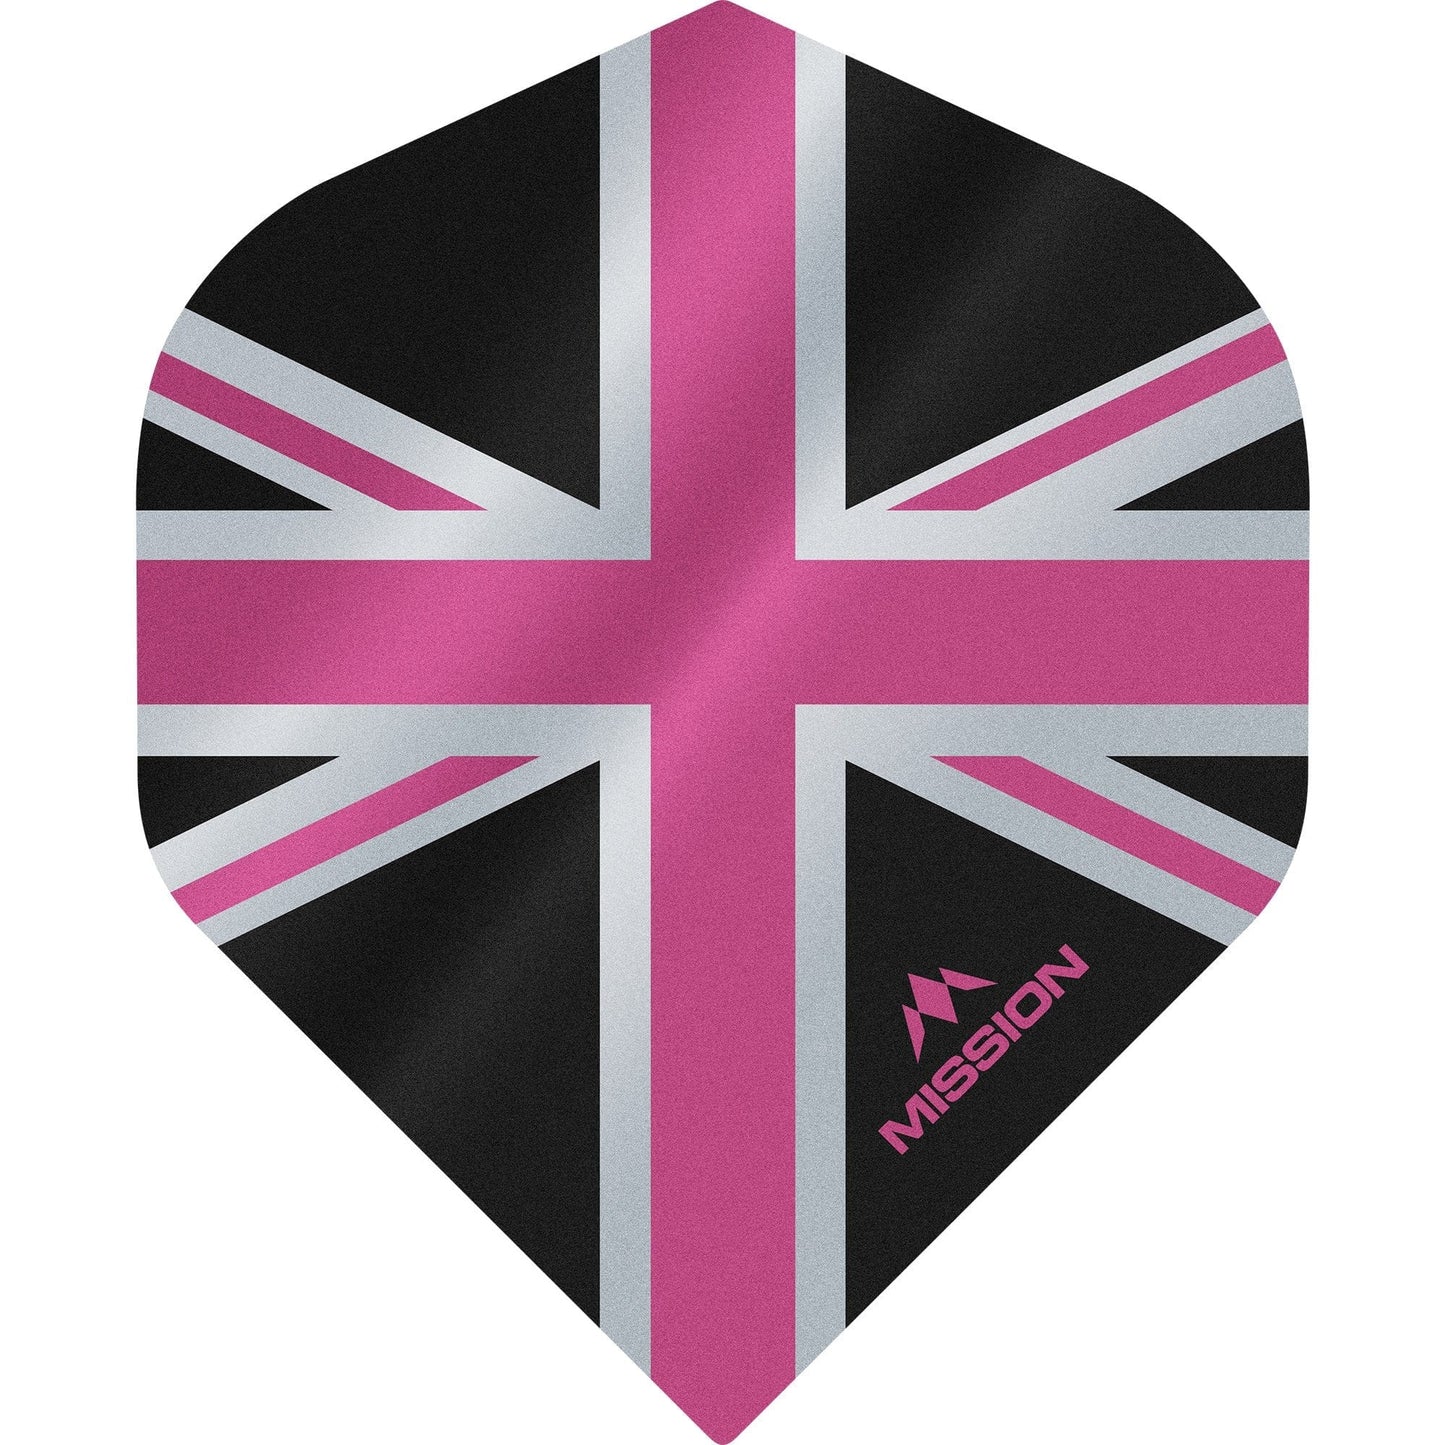 Mission Alliance Union Jack Dart Flights - No2 - Std - Black Black Pink